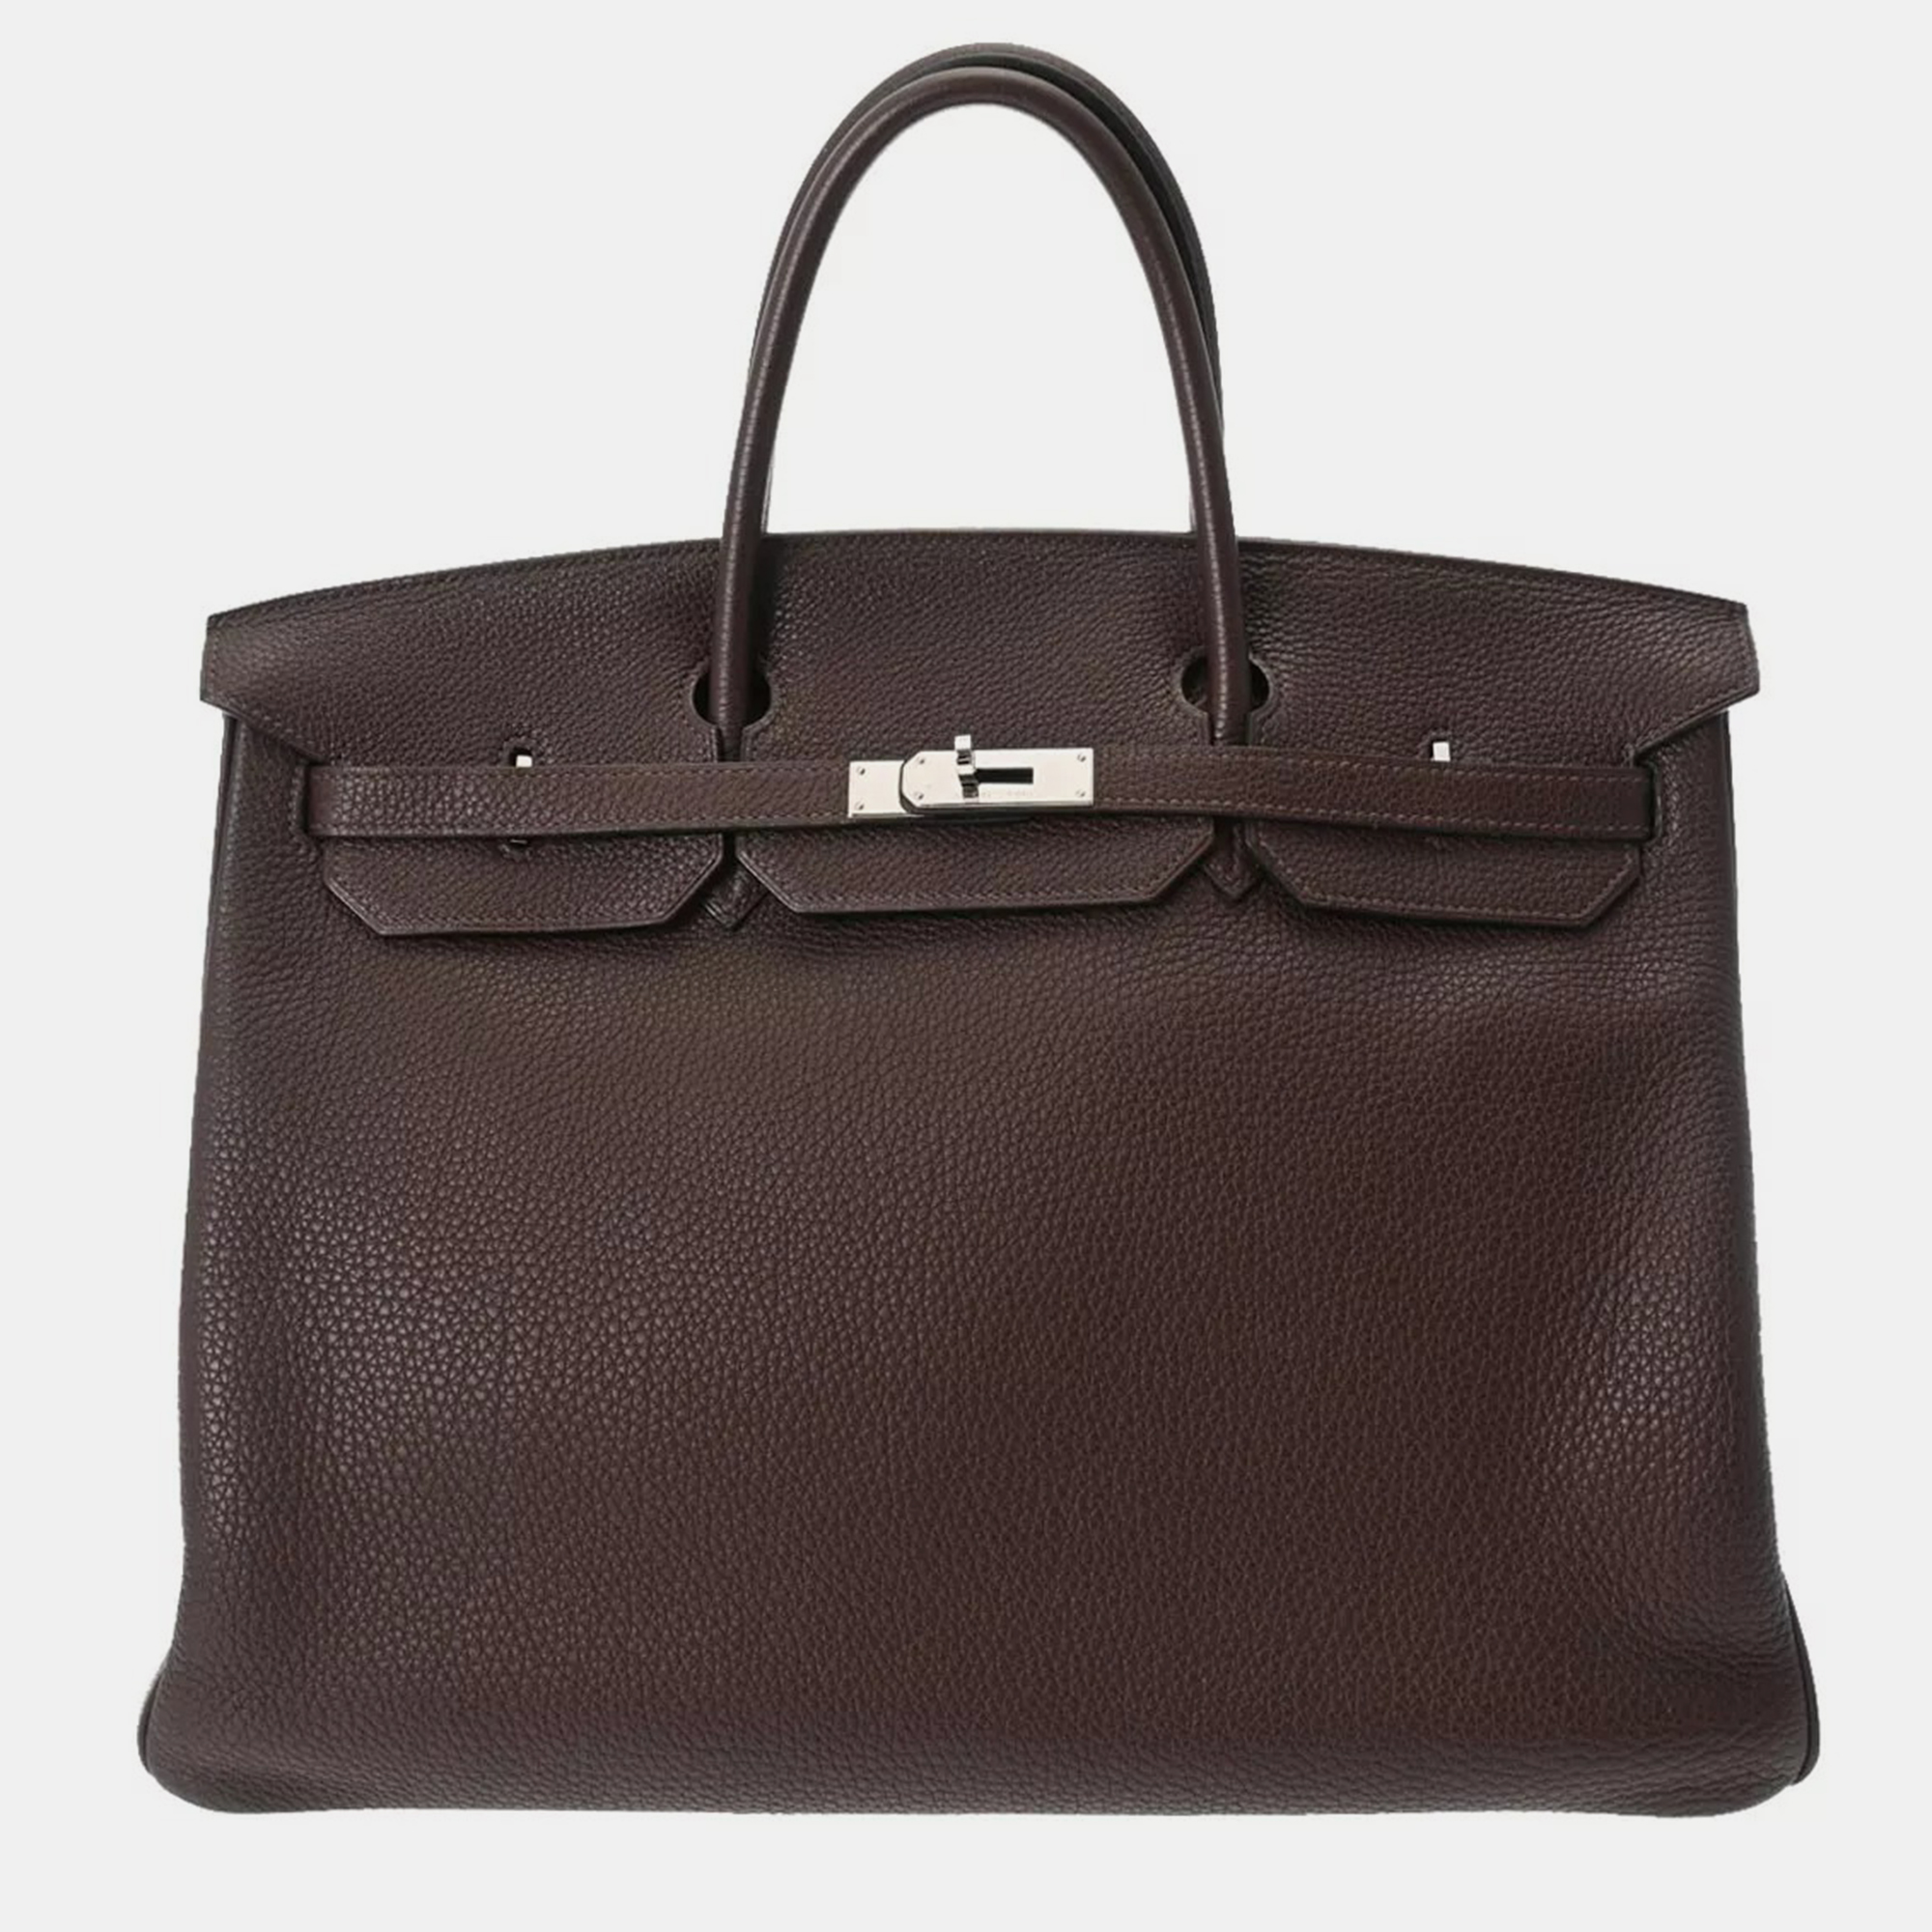 

Hermes Brown Togo Leather Birkin Handbag